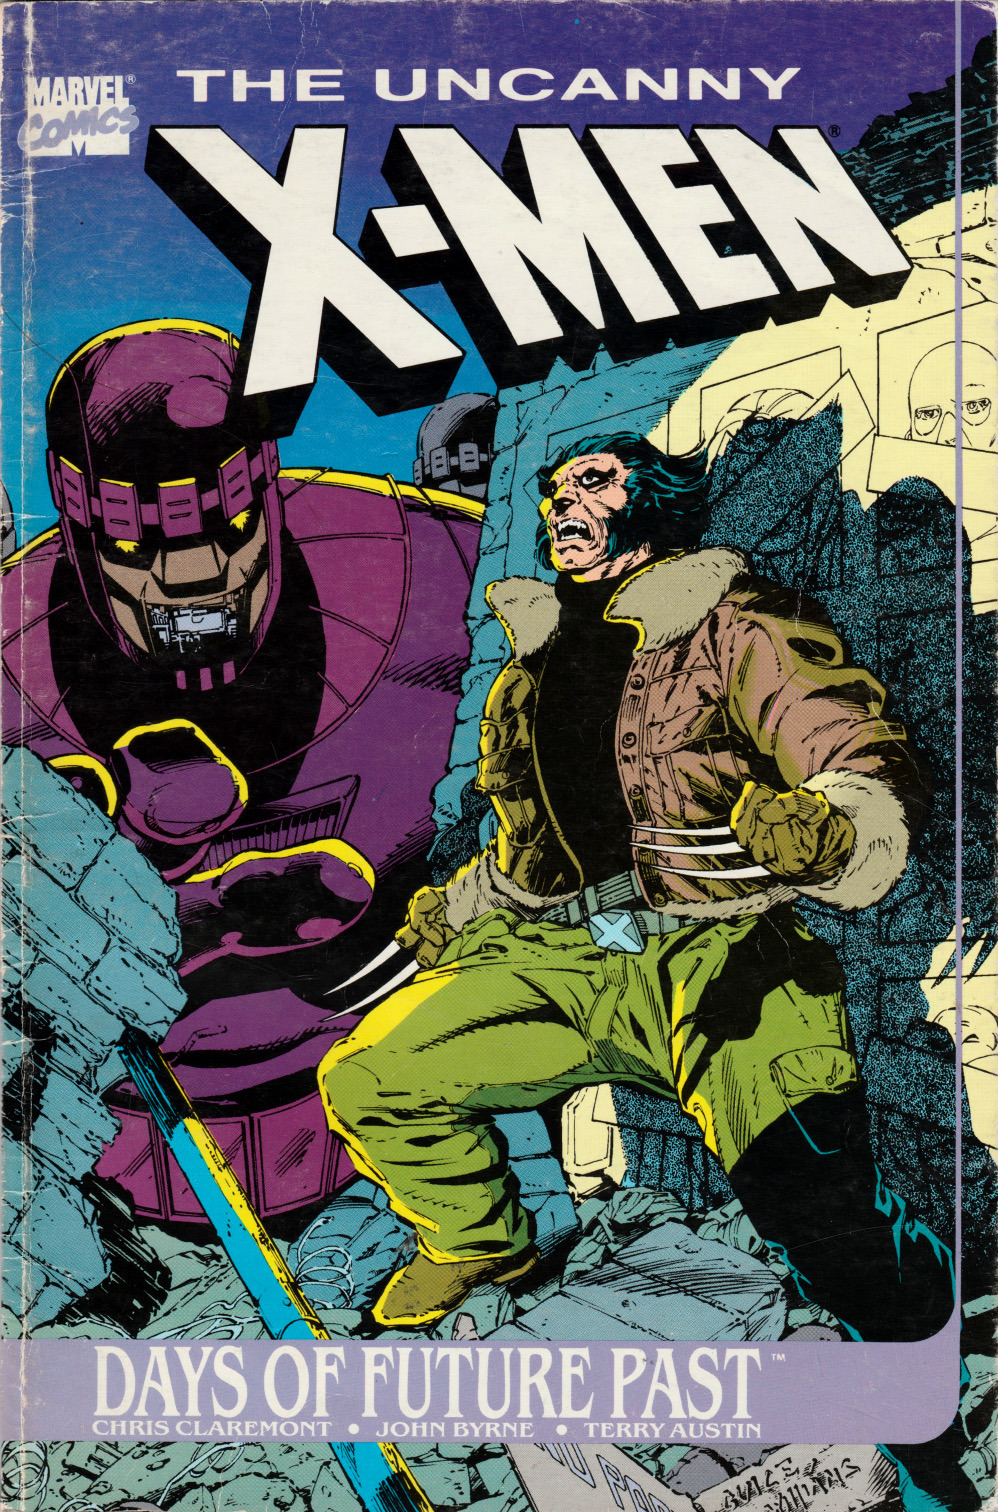 The Uncanny X-Men: Days of Future Past (Marvel Comics, 1991). Cover art by Jackson